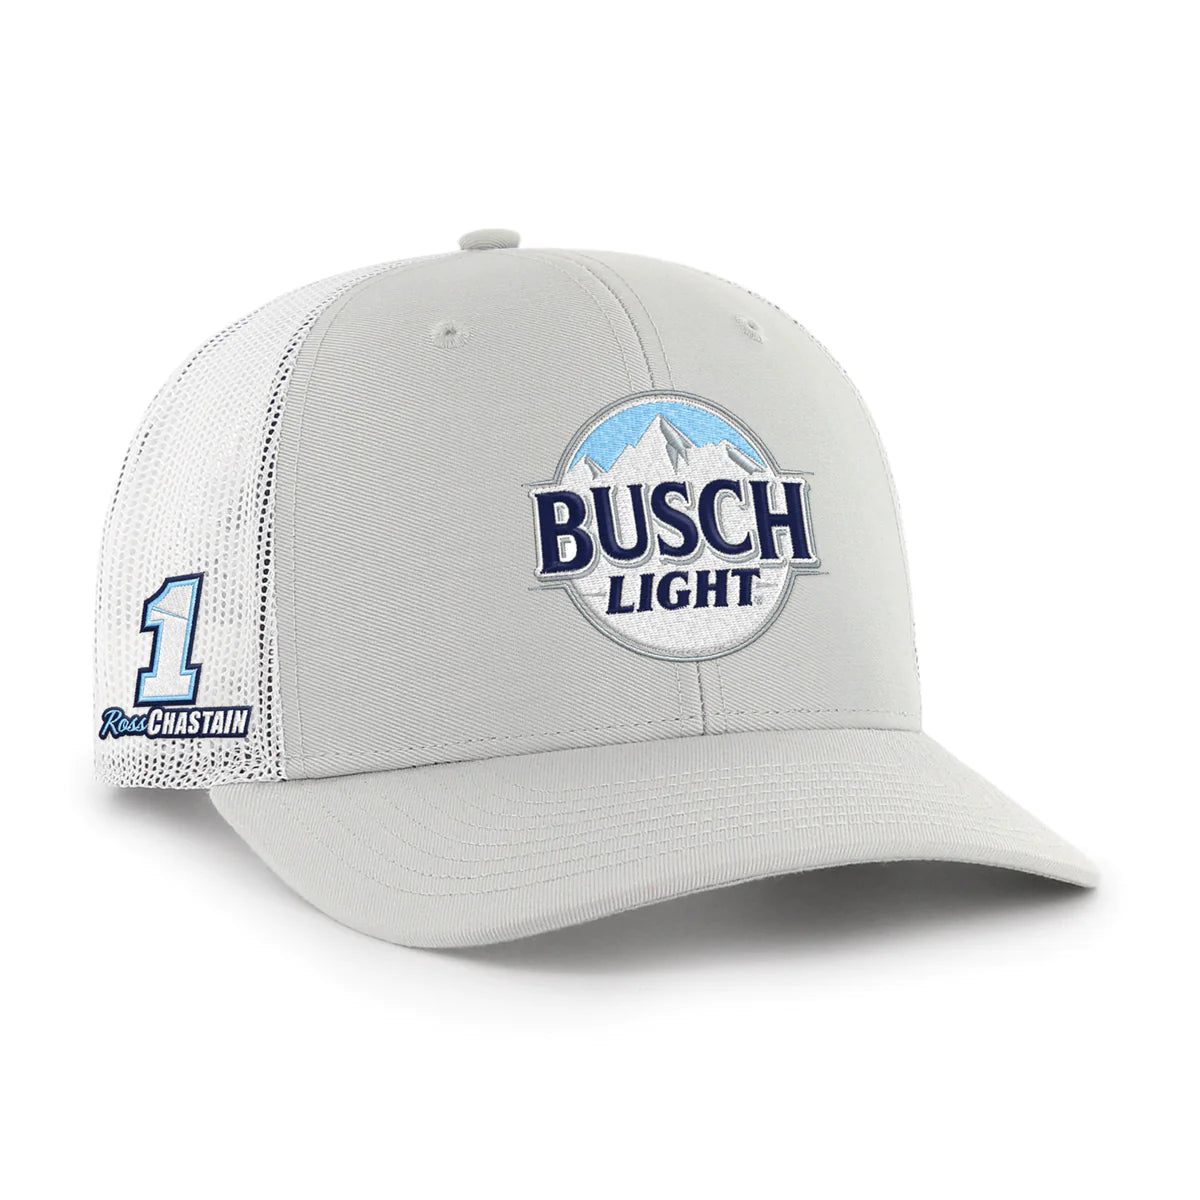 Ross Chastain FOUR HIT Trucker Hat from '47 Brand